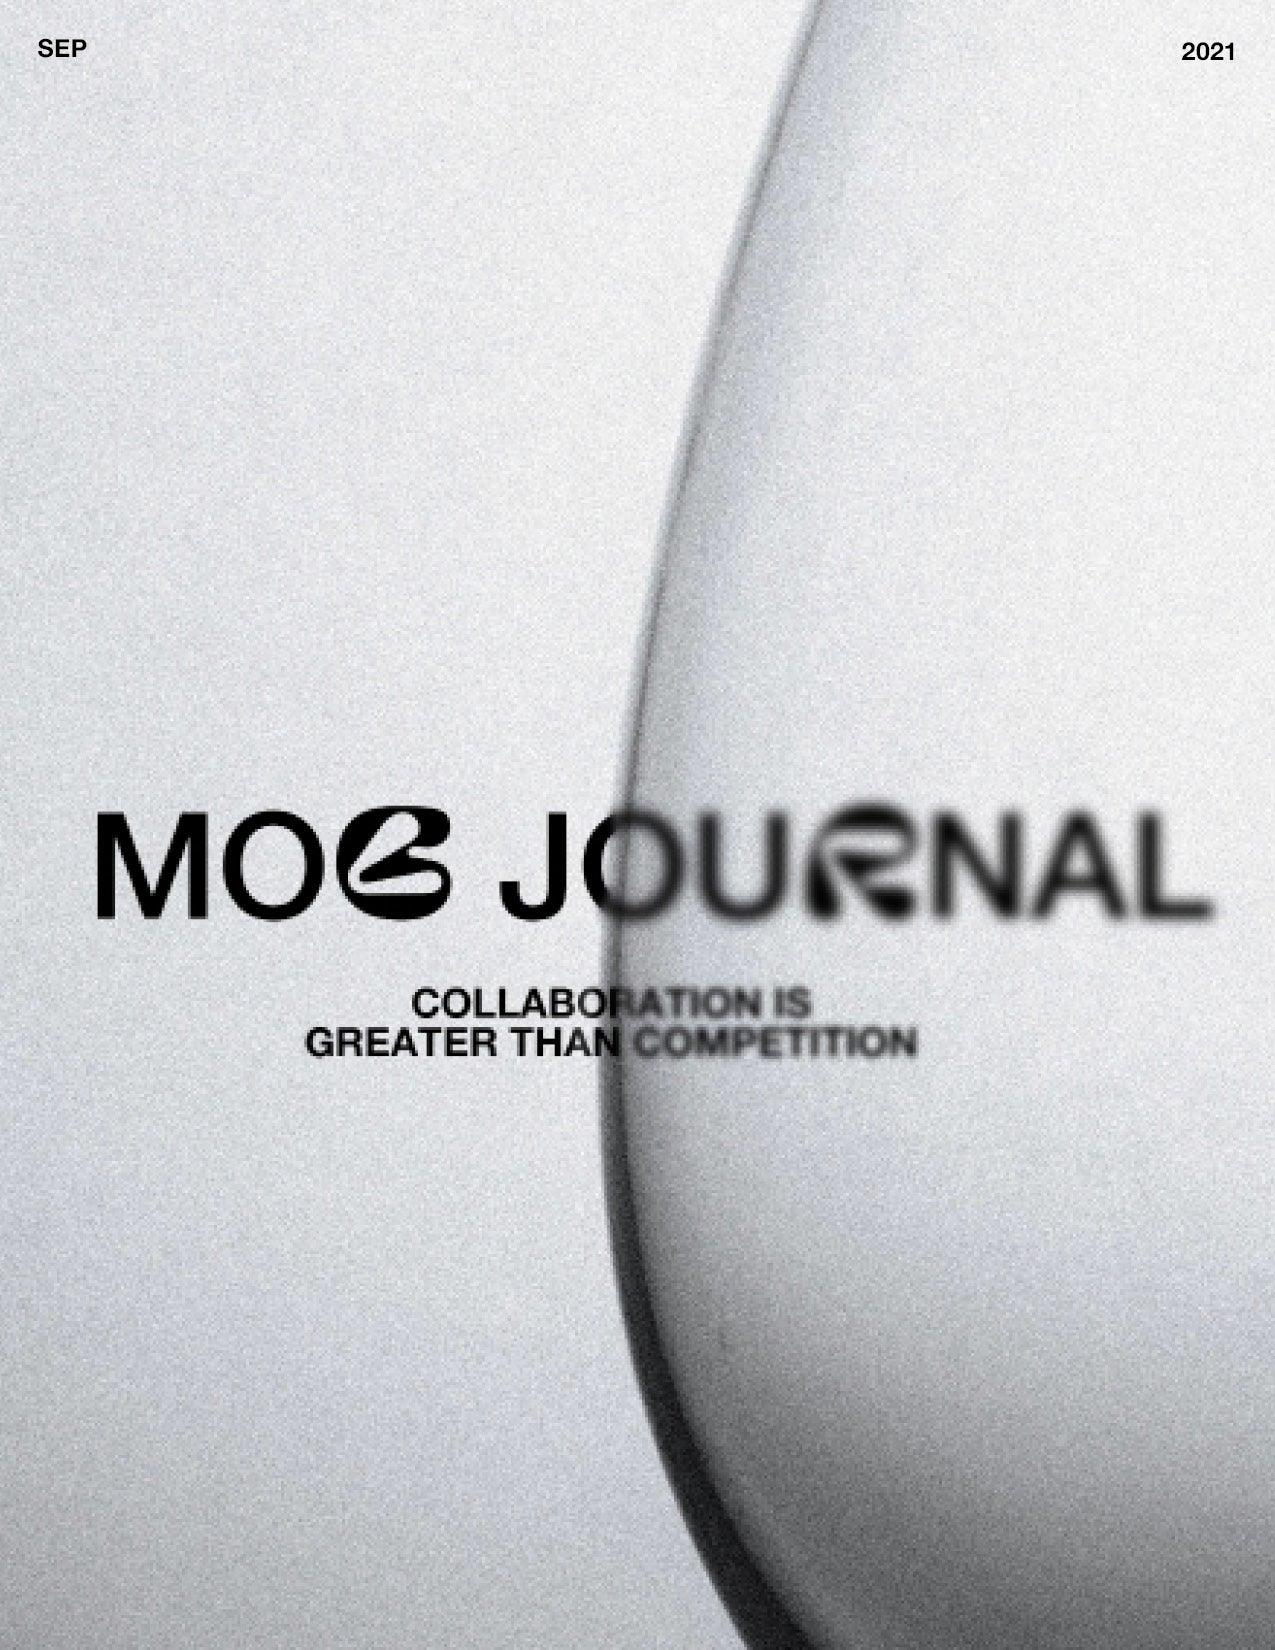 MOB JOURNAL | VOLUME SEVENTEEN | ISSUE #44 - Mob Journal